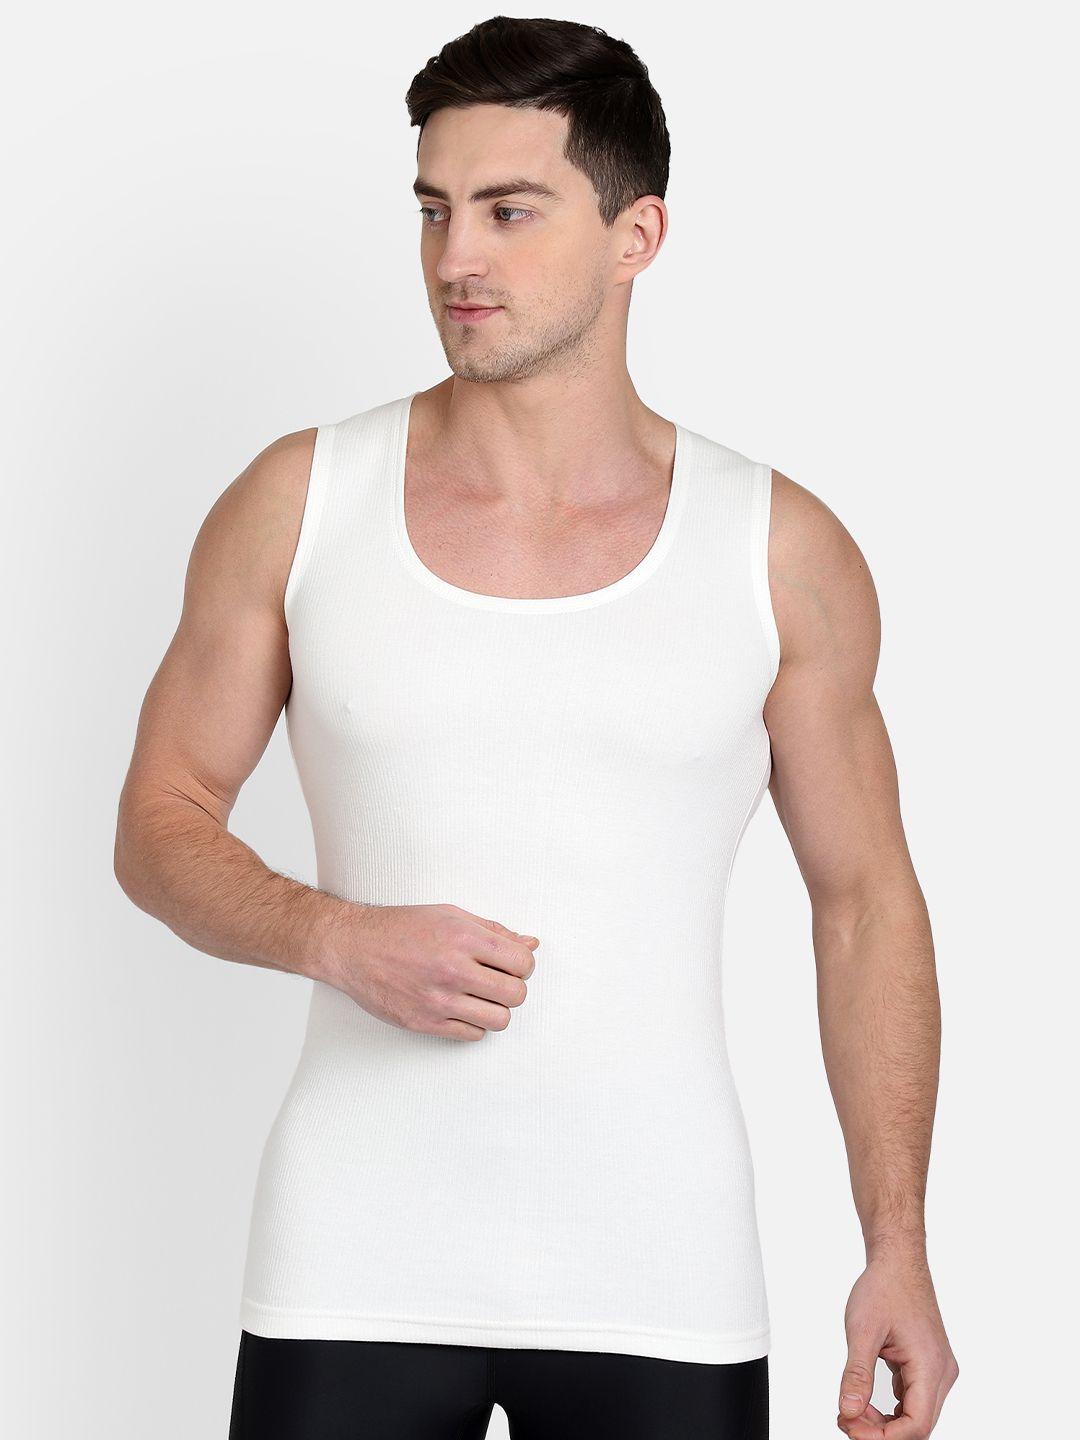 dyca men off-white sleeveless thermal t-shirt